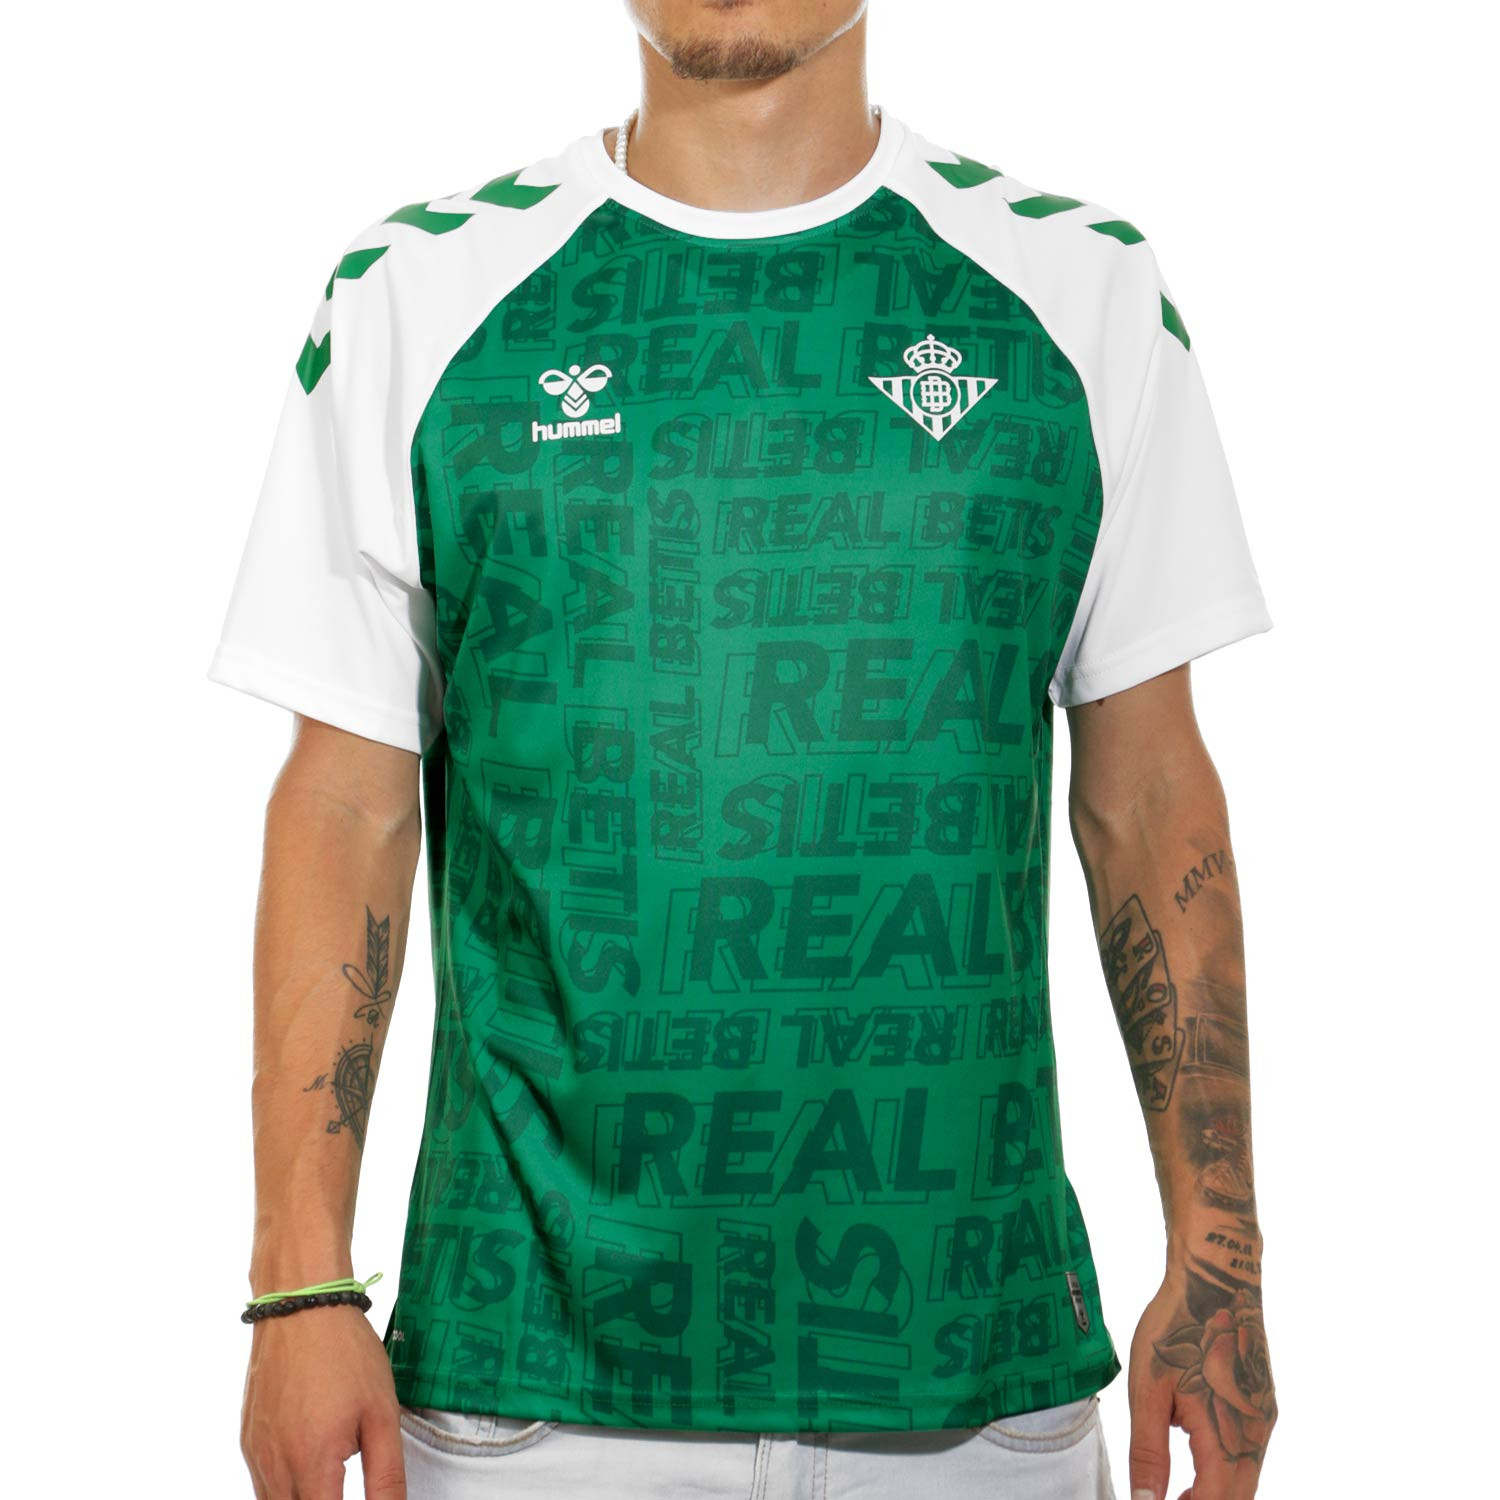 Camiseta Hummel Real Betis Balompié pregame verde blanca